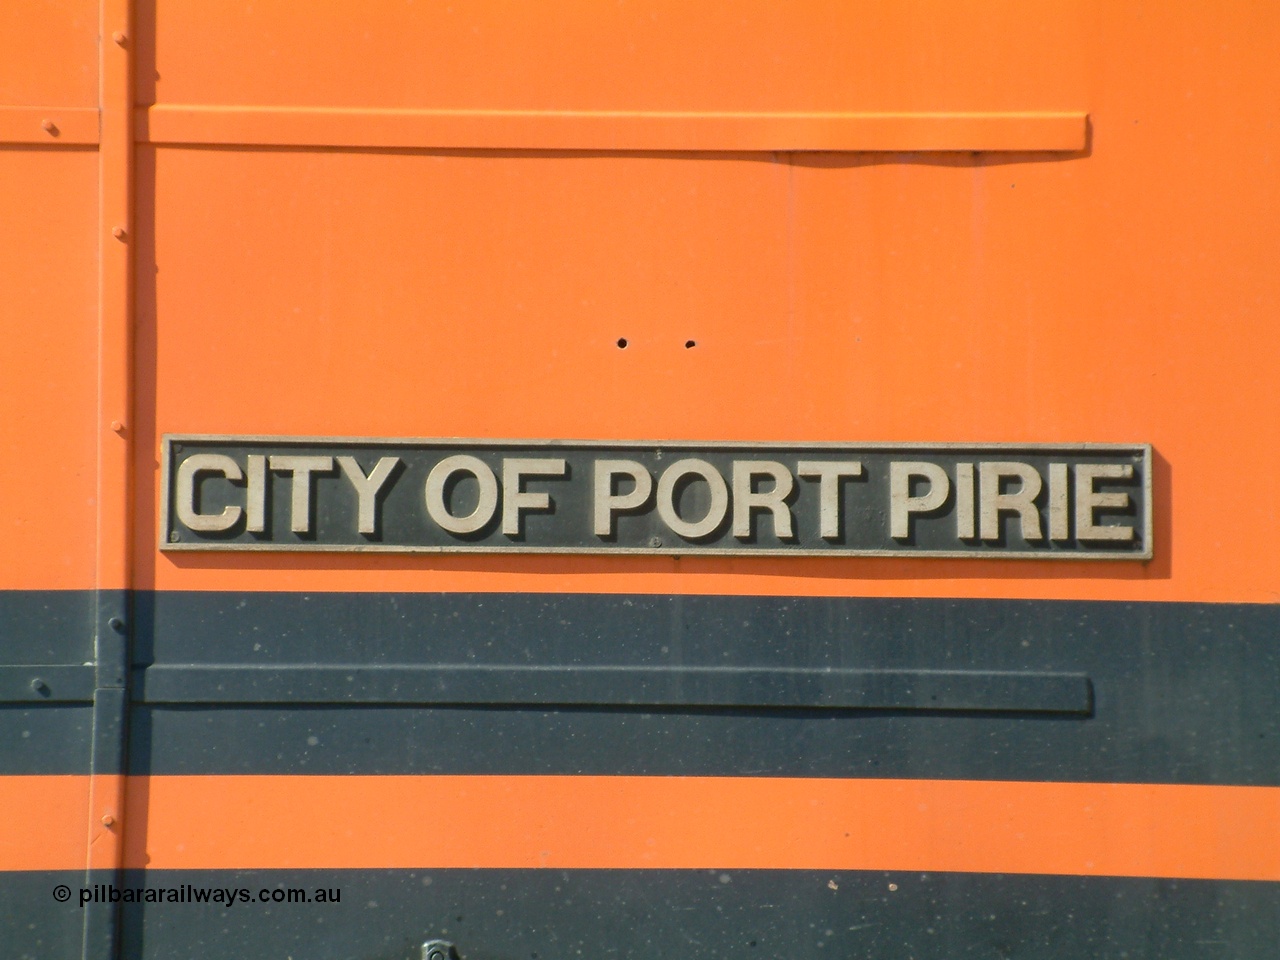 030404 141628
Port Augusta Spencer Junction yard, City of Port Pirie name plate on the side of ALF 18.
Keywords: ALF-class;ALF18;94-AN-018;MKA;EMD;JT26C-2M;AL-class;